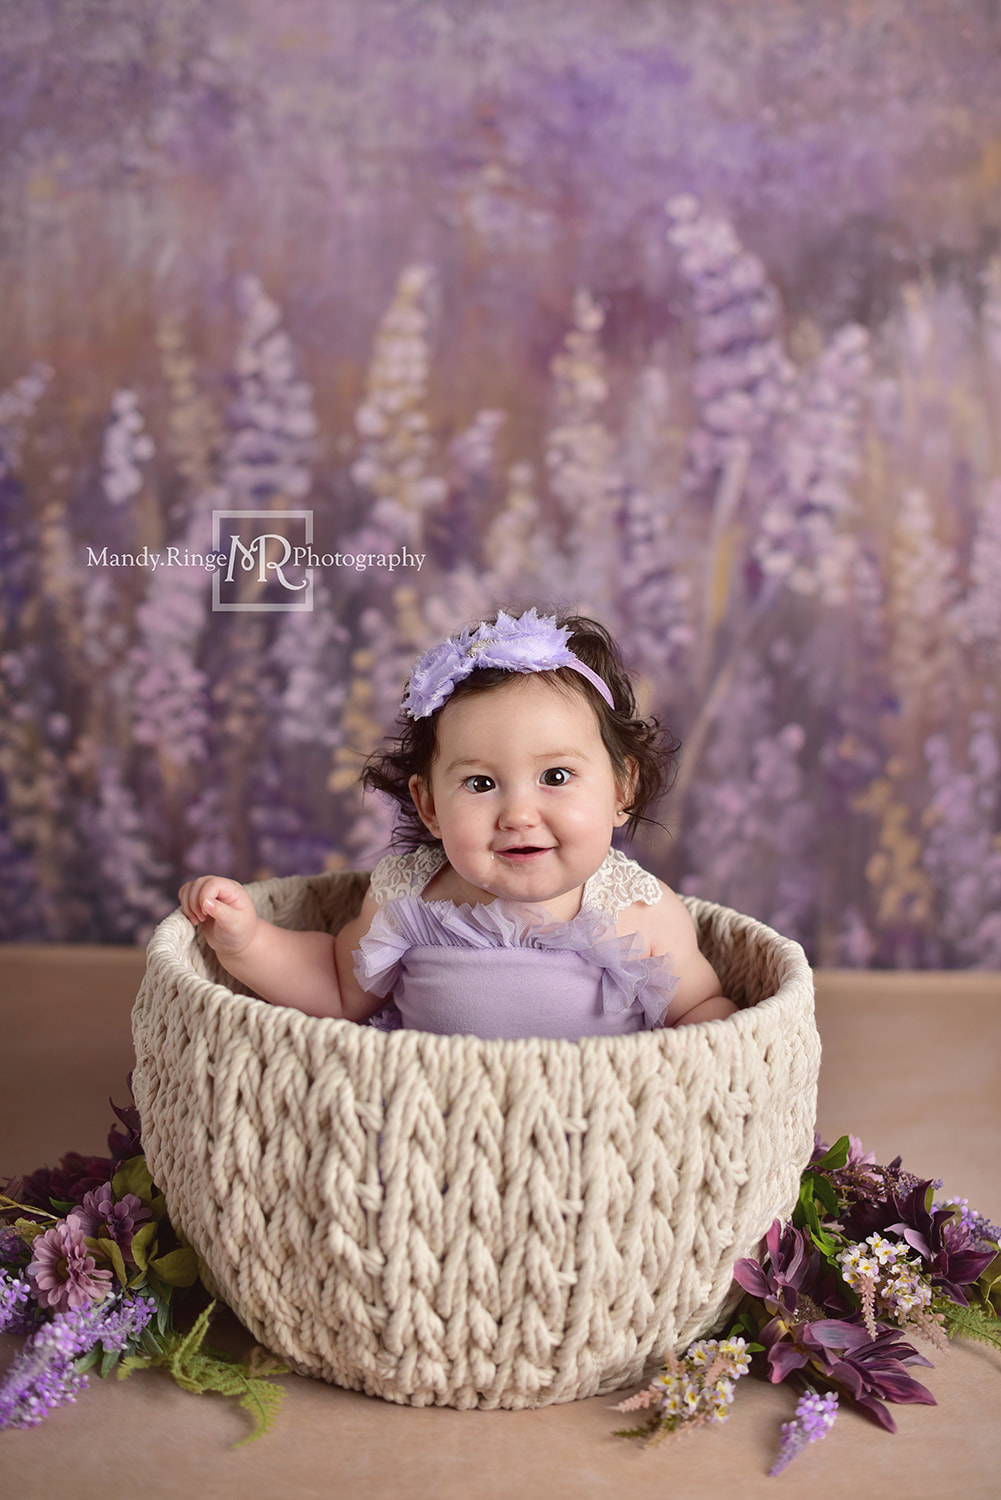 Babies, milestone session, sitter, baby, St. Charles, IL studio, Mandy Ringe Photography